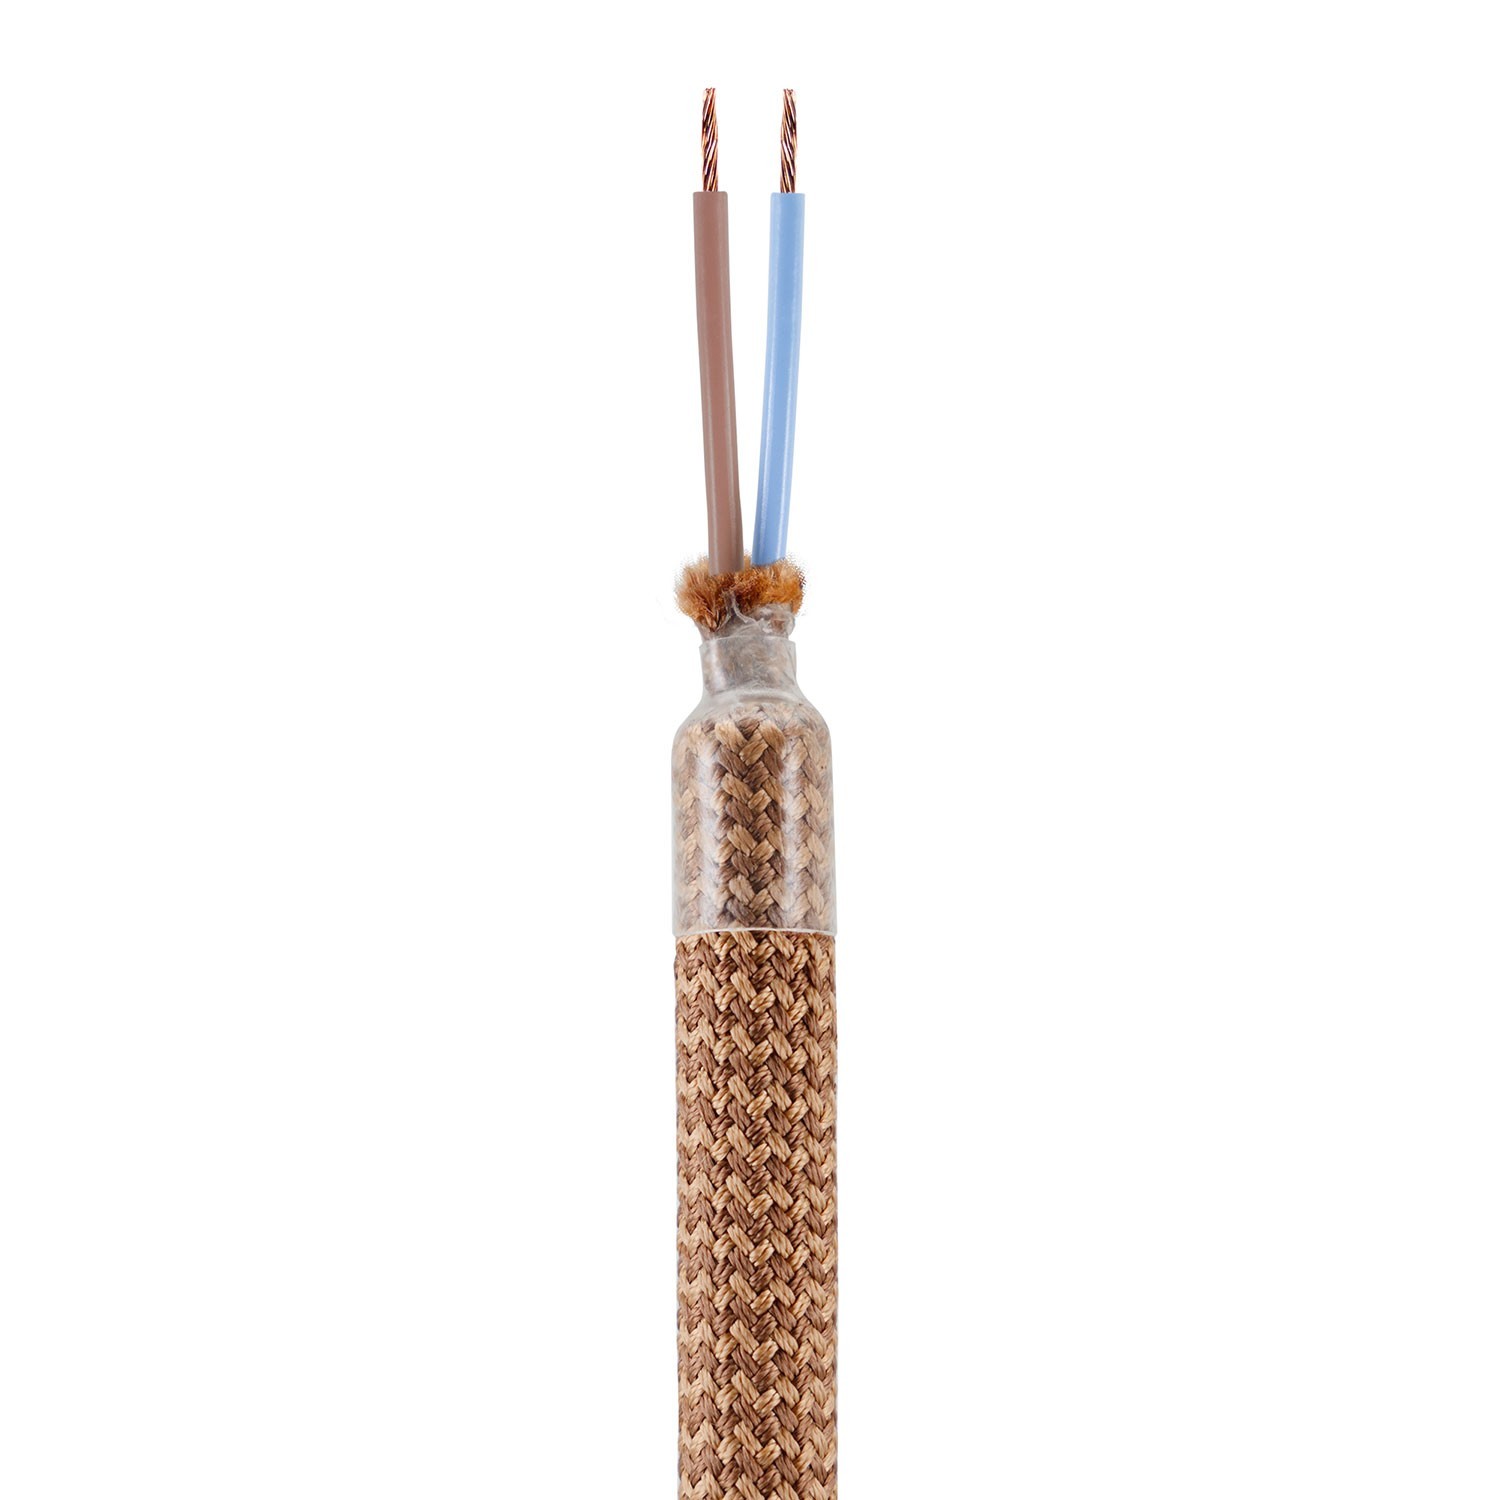 Creative Flex flexible tube covered in Copper RM74 fabric